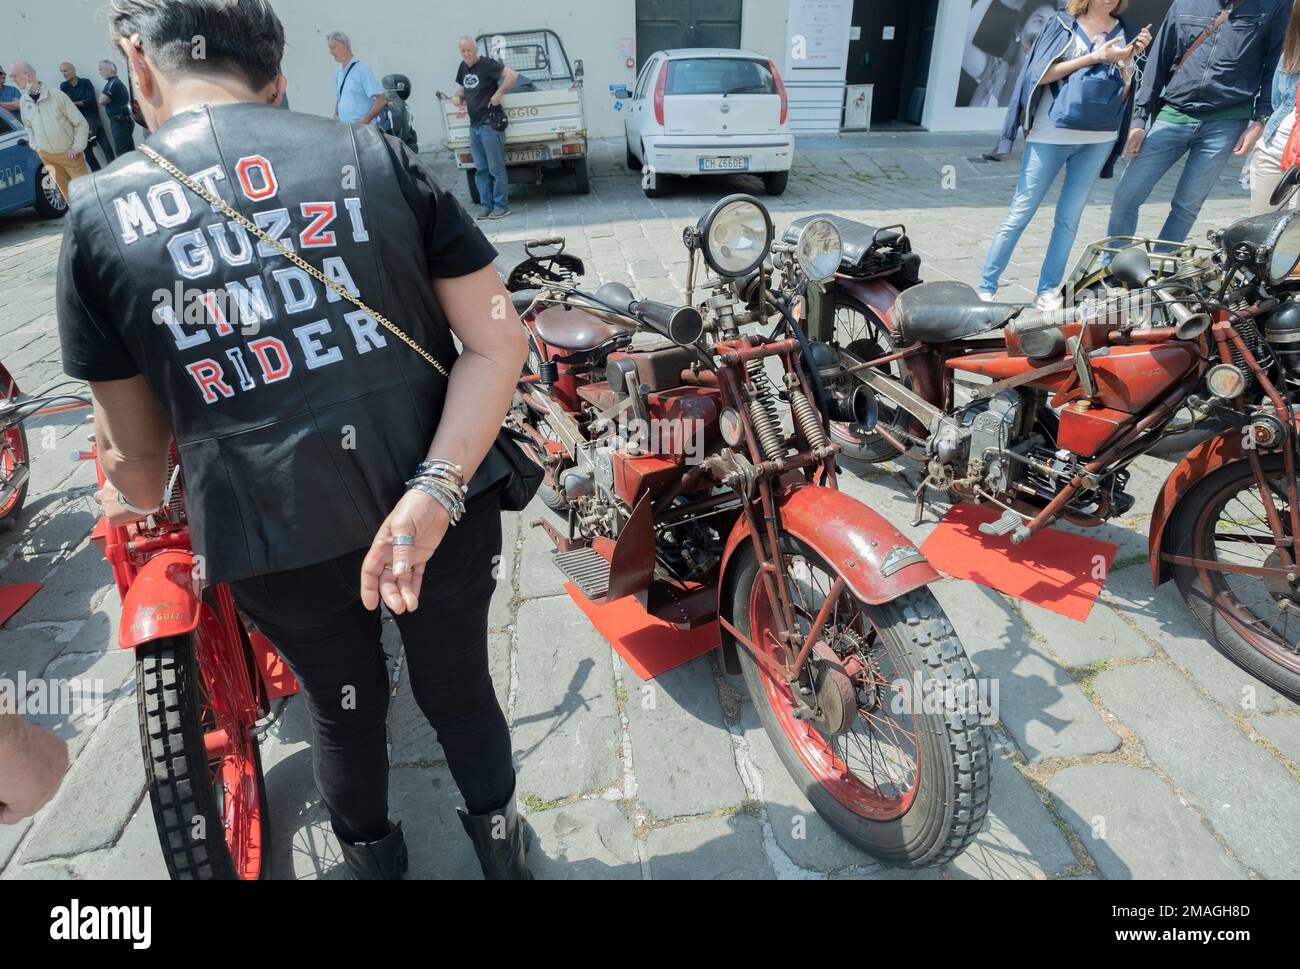 Mostra delle moto d'epoca Moto Guzzi, Genova, Italia Foto stock - Alamy